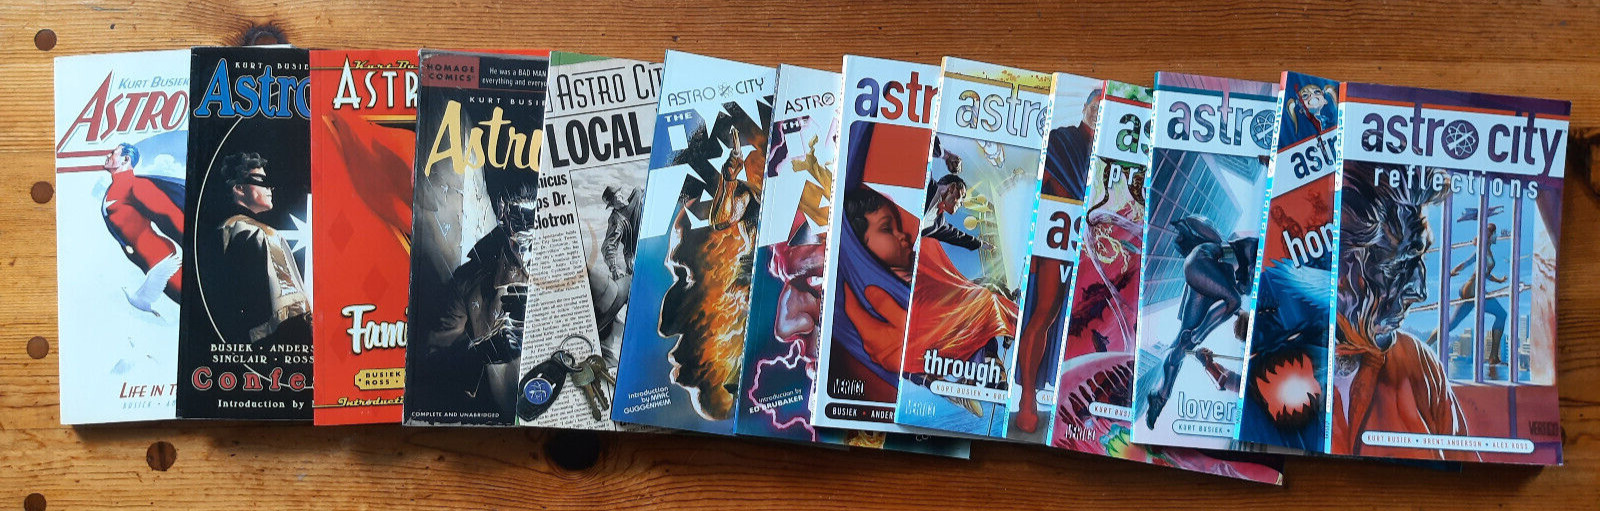 Astro City TPB Lot, Vol 1 - 14